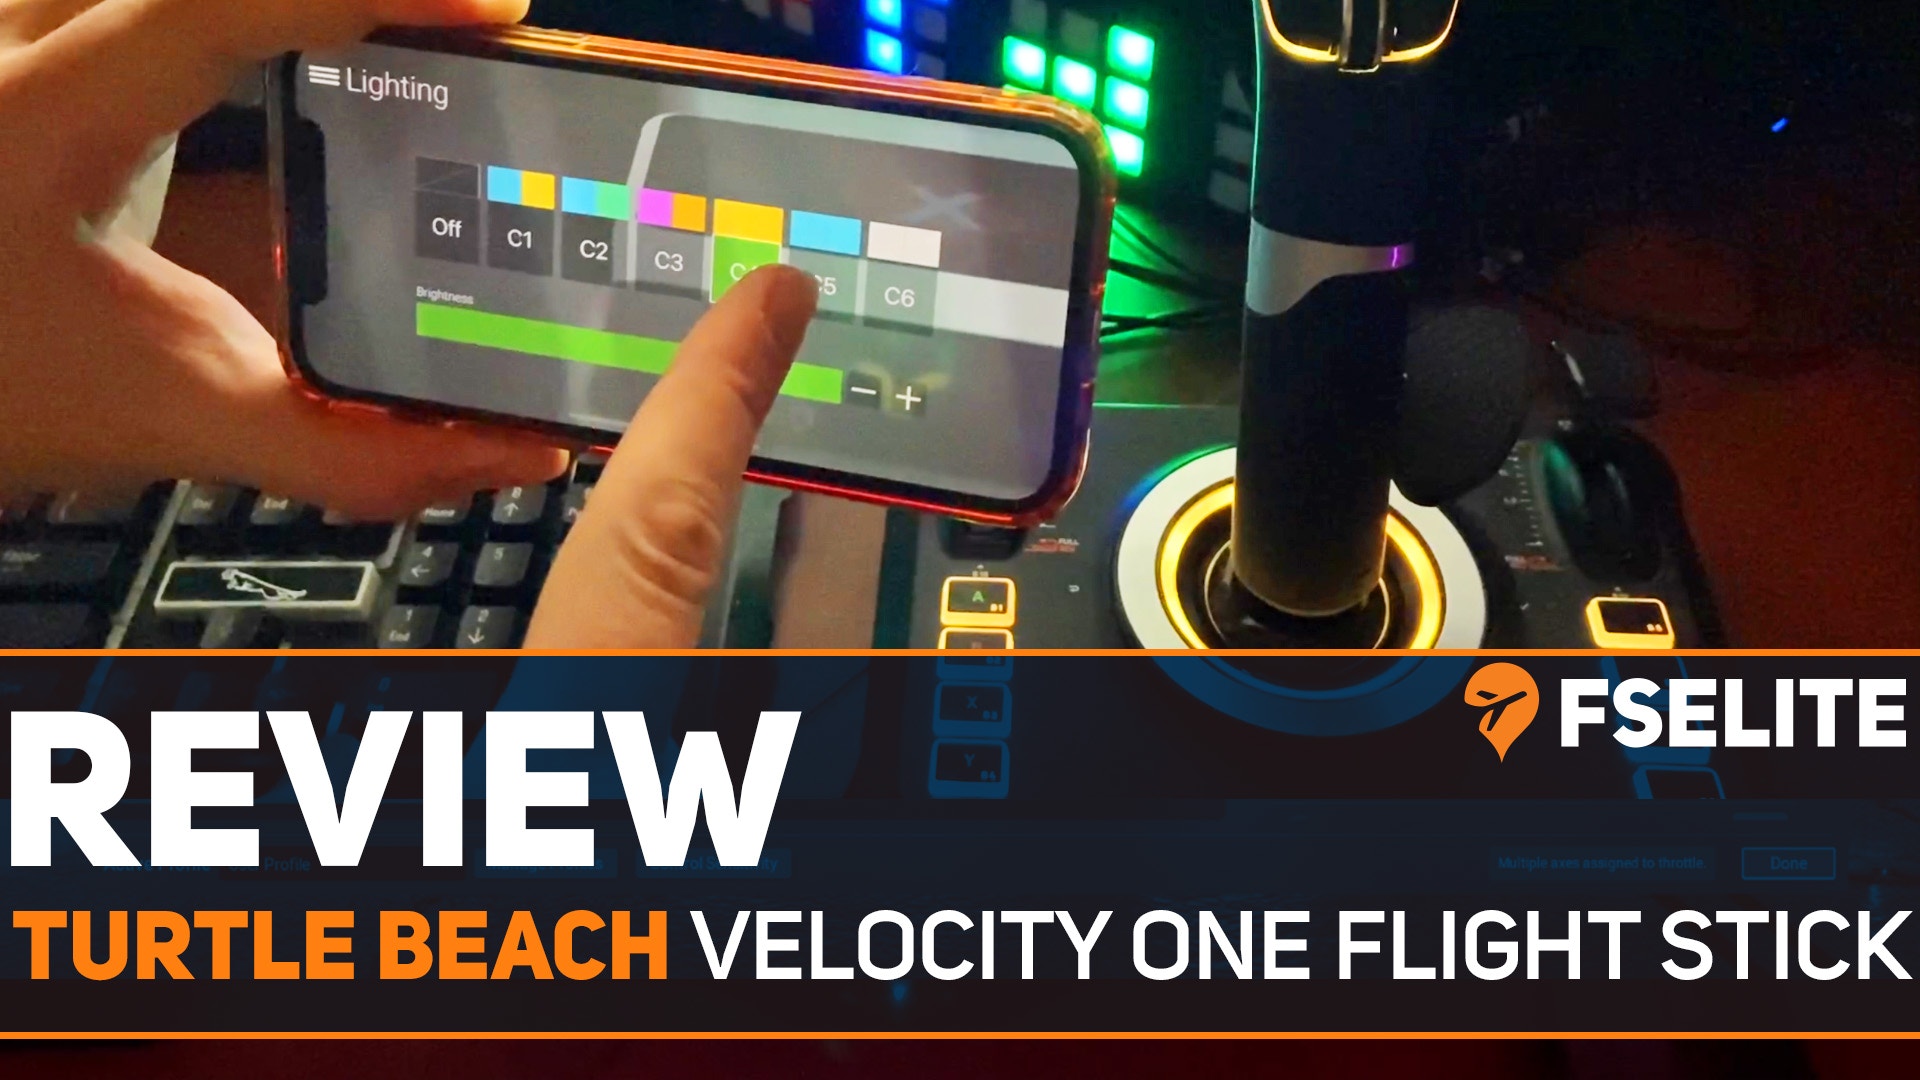 Review: The VelocityOne Flightstick - FSElite